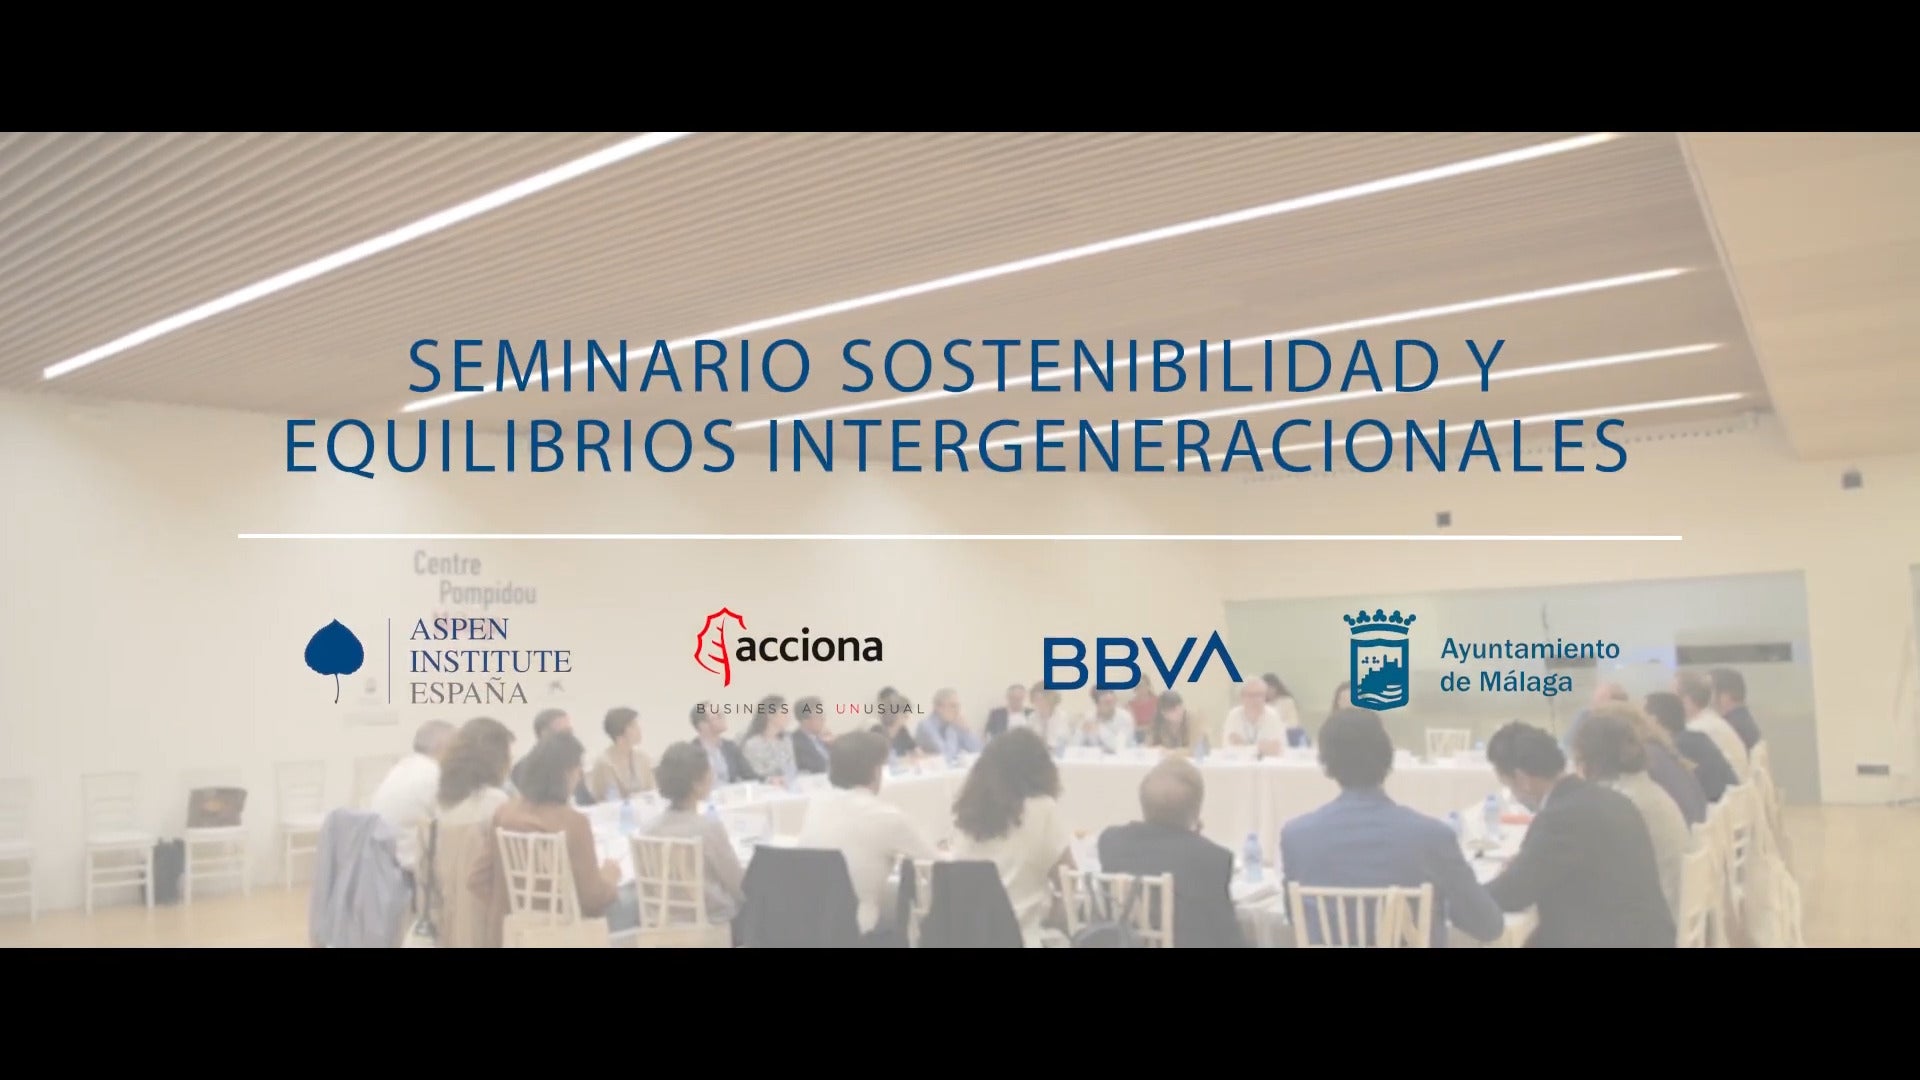 Aspen España Seminar on Sustainability and Intergenerational Balances